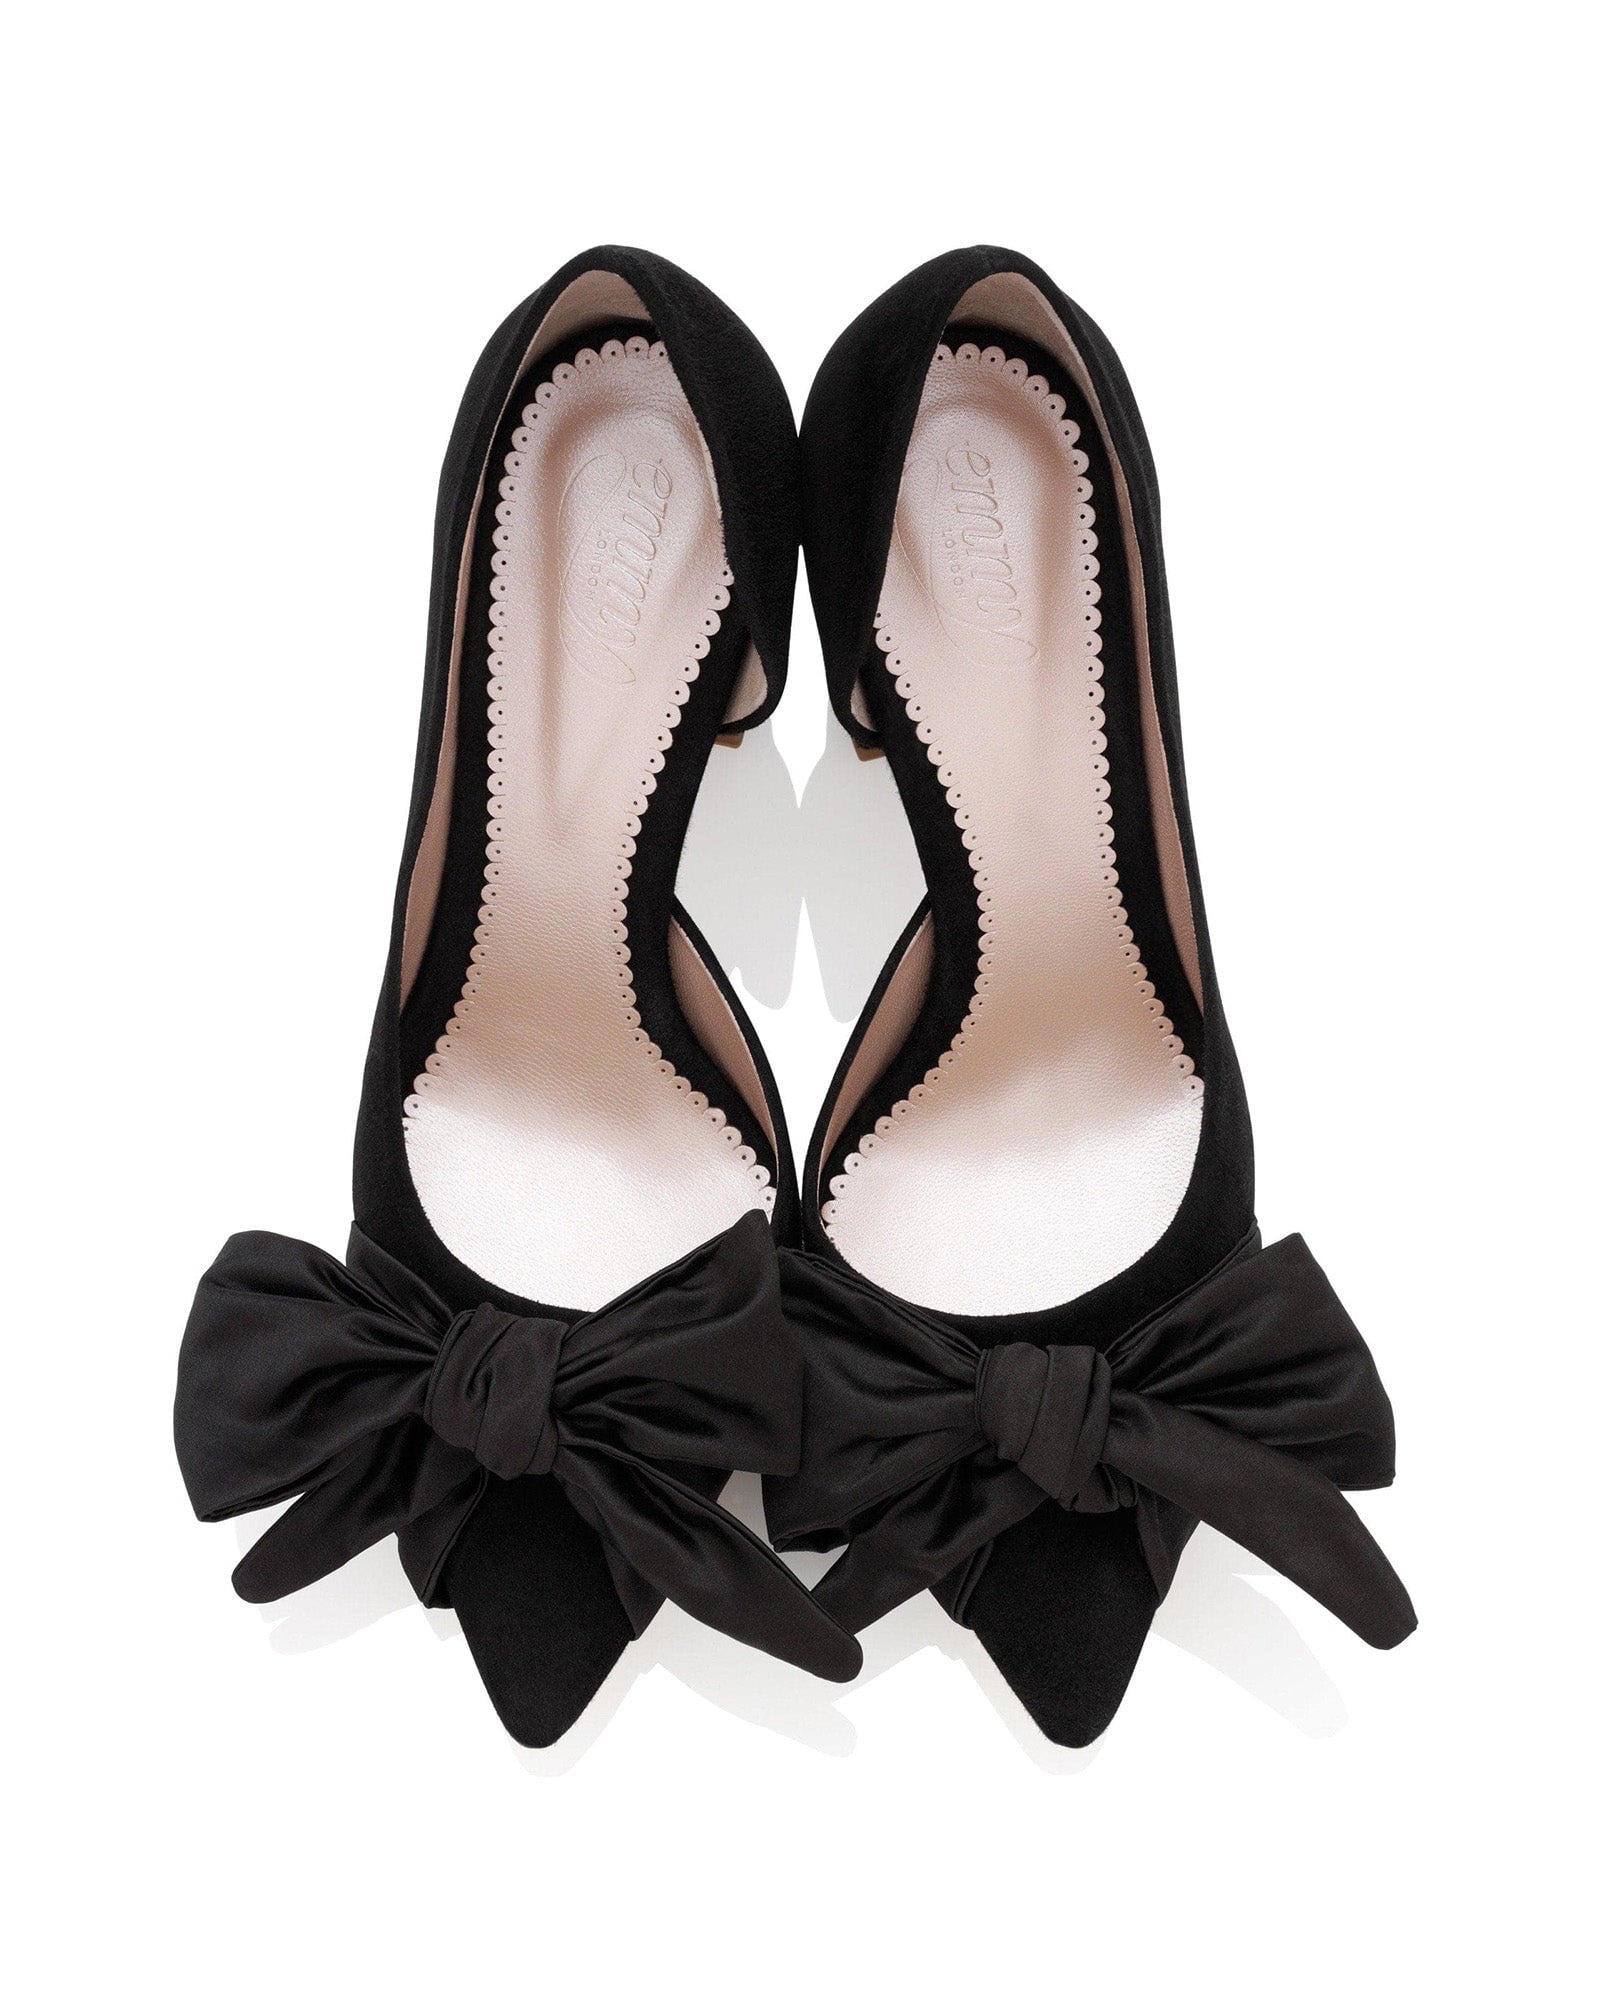 Florence Jet Black Mid Fashion Shoe Black Suede Court Shoe with Satin Bow  image